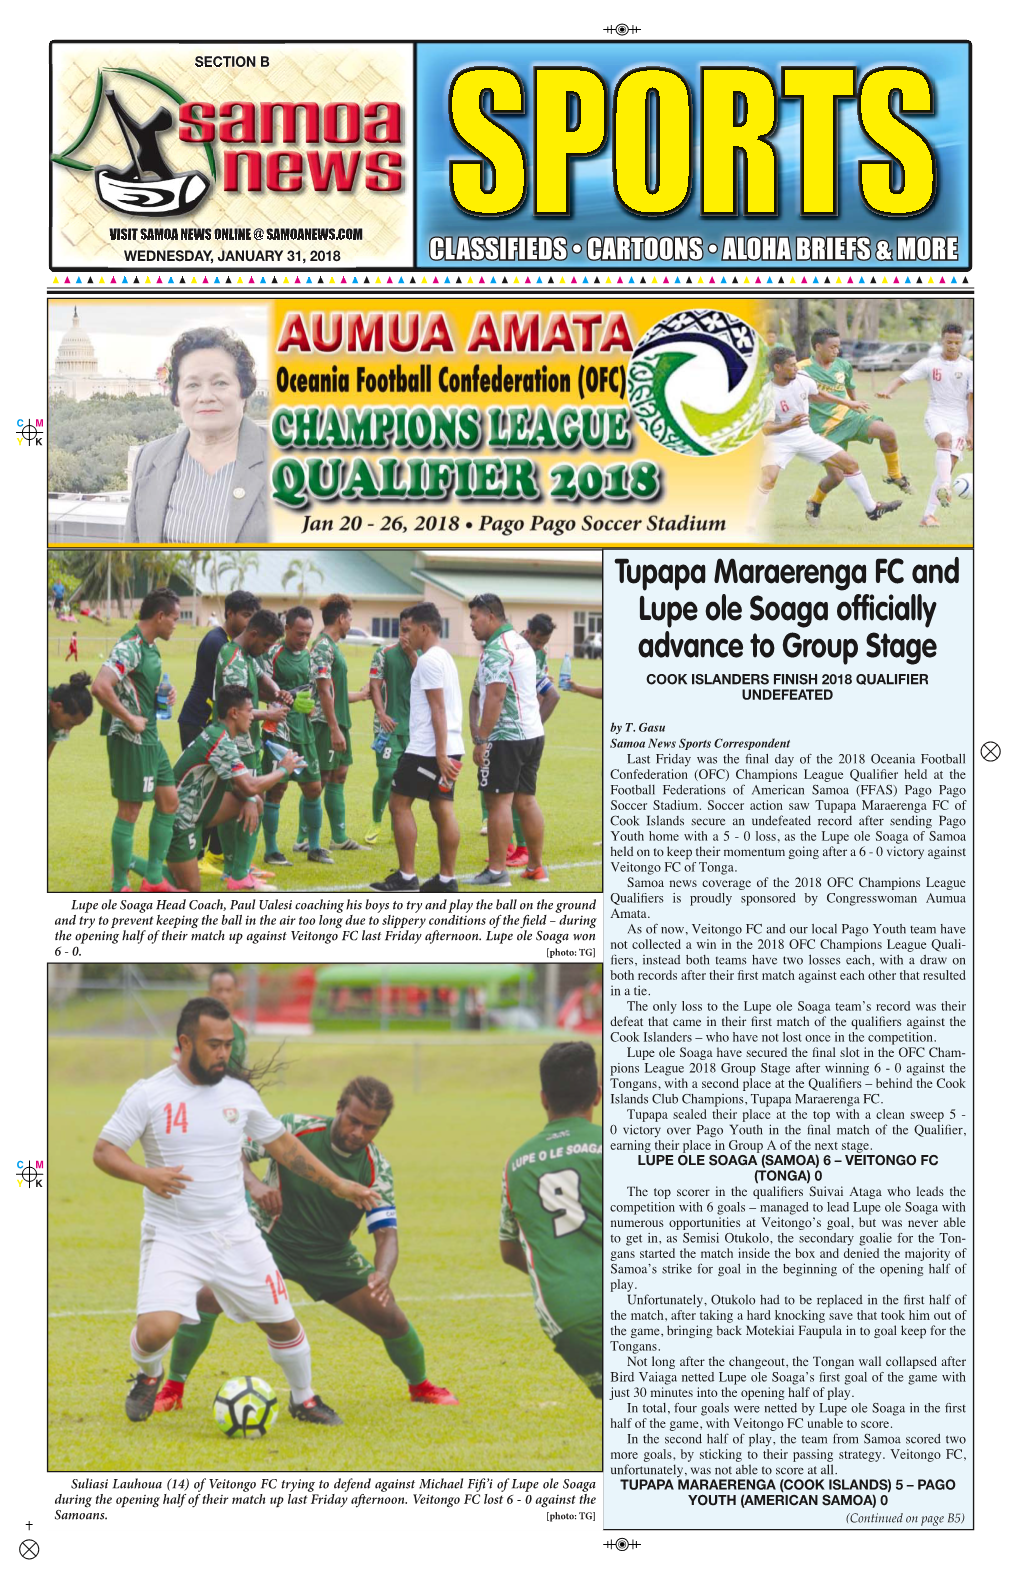 Tupapa Maraerenga FC and Lupe Ole Soaga Officially Advance to Group